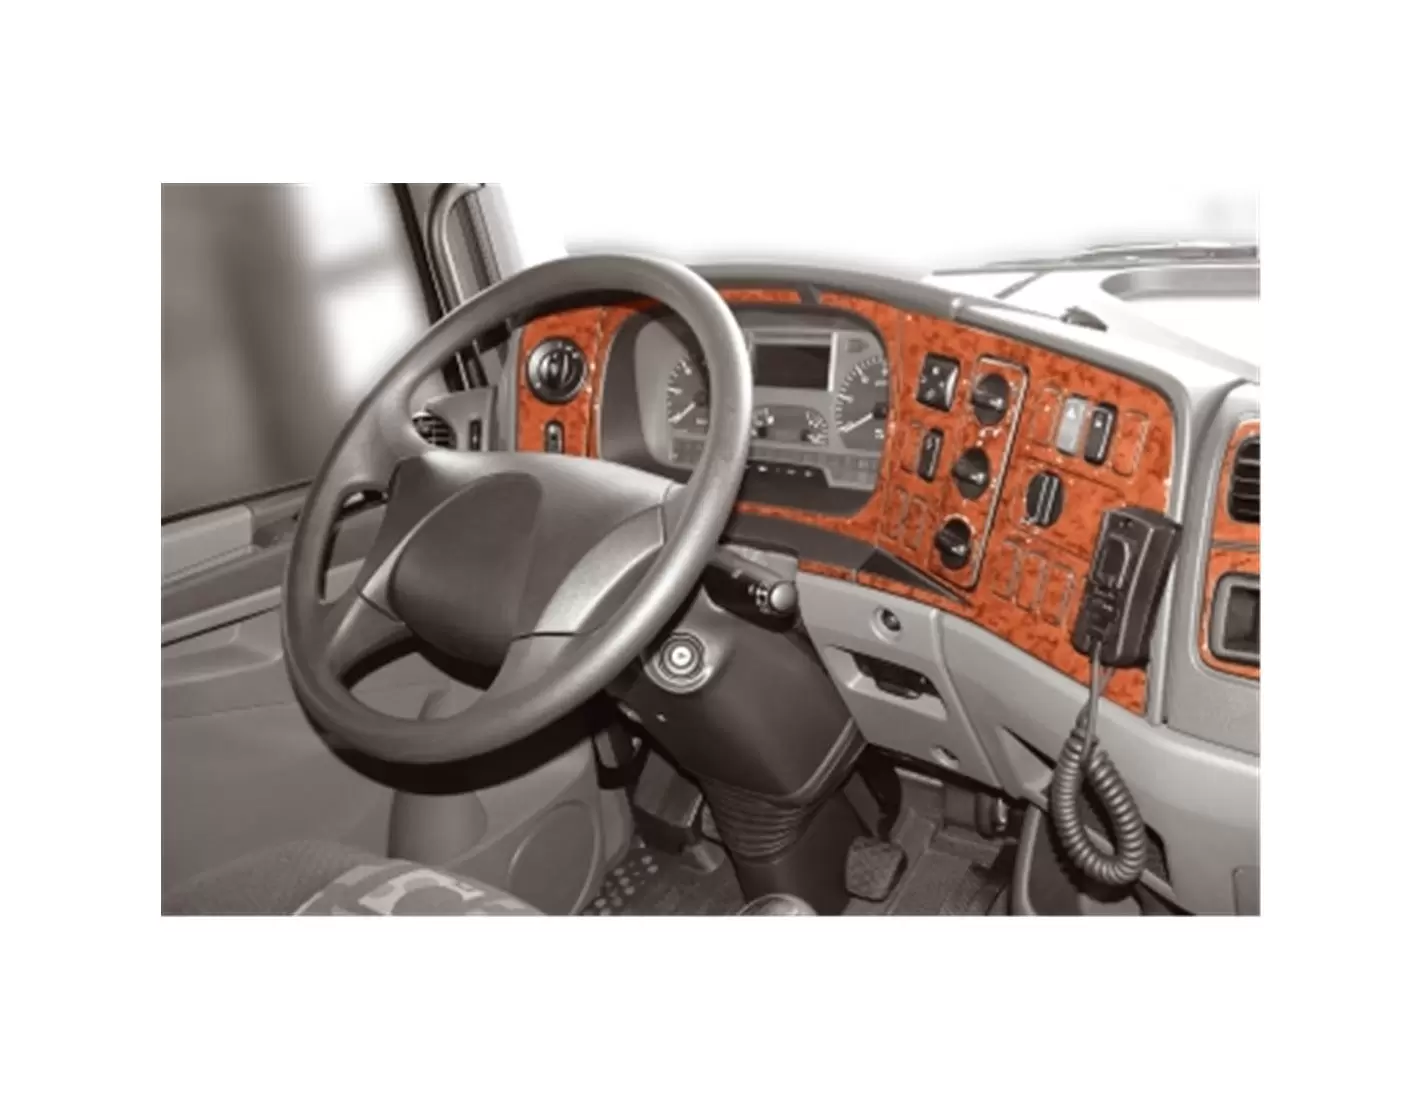 Mercedes Atego-Axor 11.2004 3M 3D Interior Dashboard Trim Kit Dash Trim Dekor 25-Parts